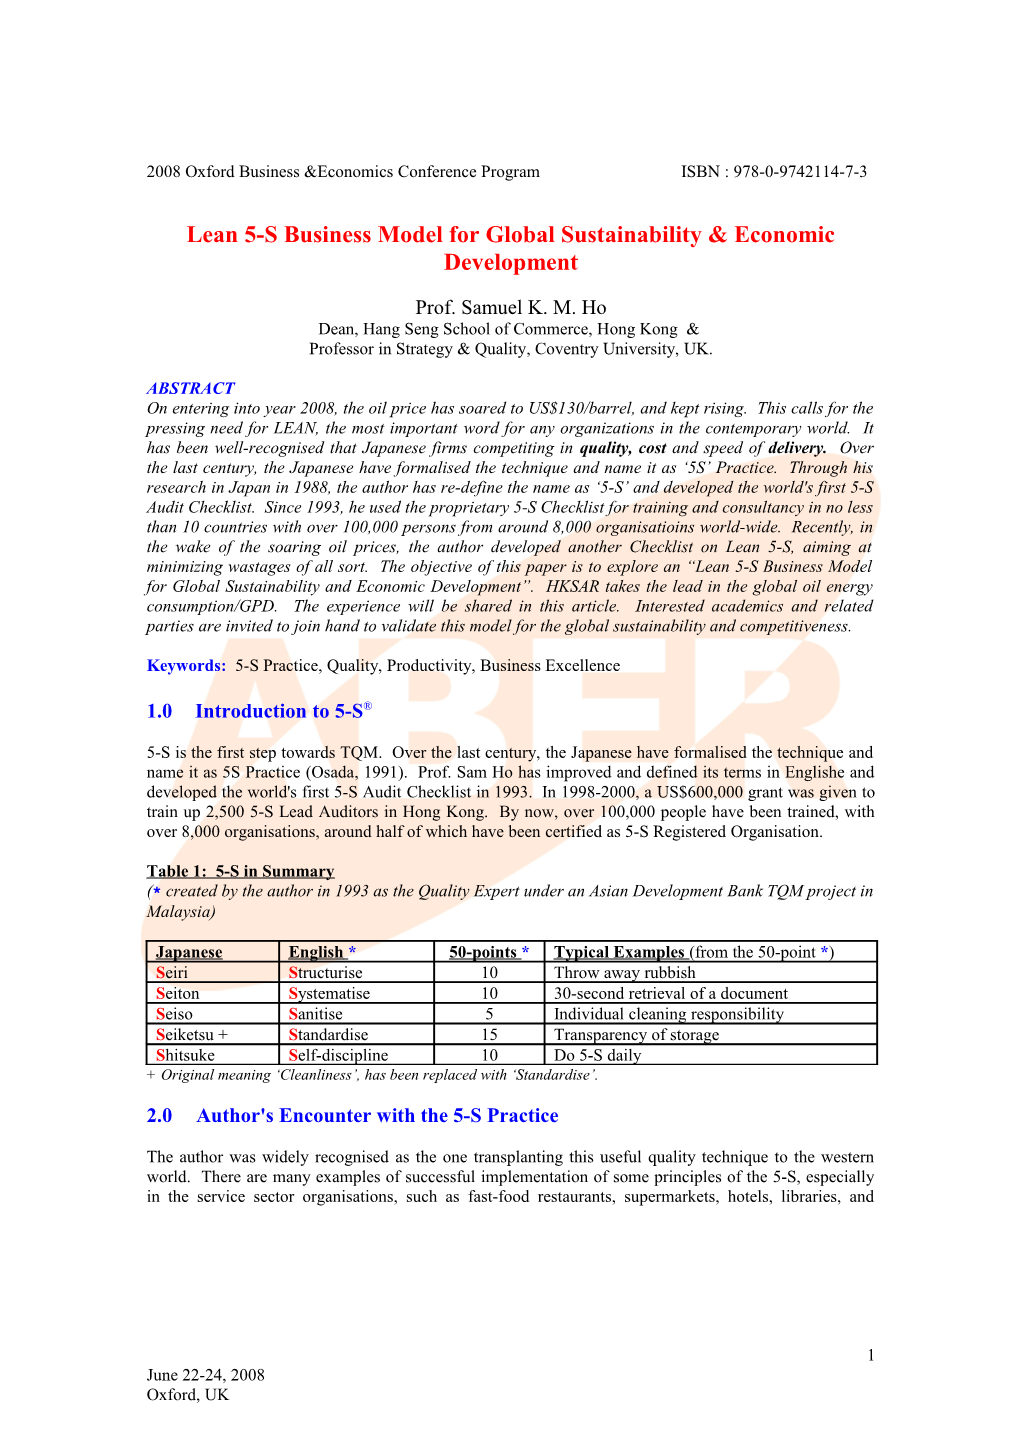 Lean 5-S Business Model for Global Sustainability & Economic Development